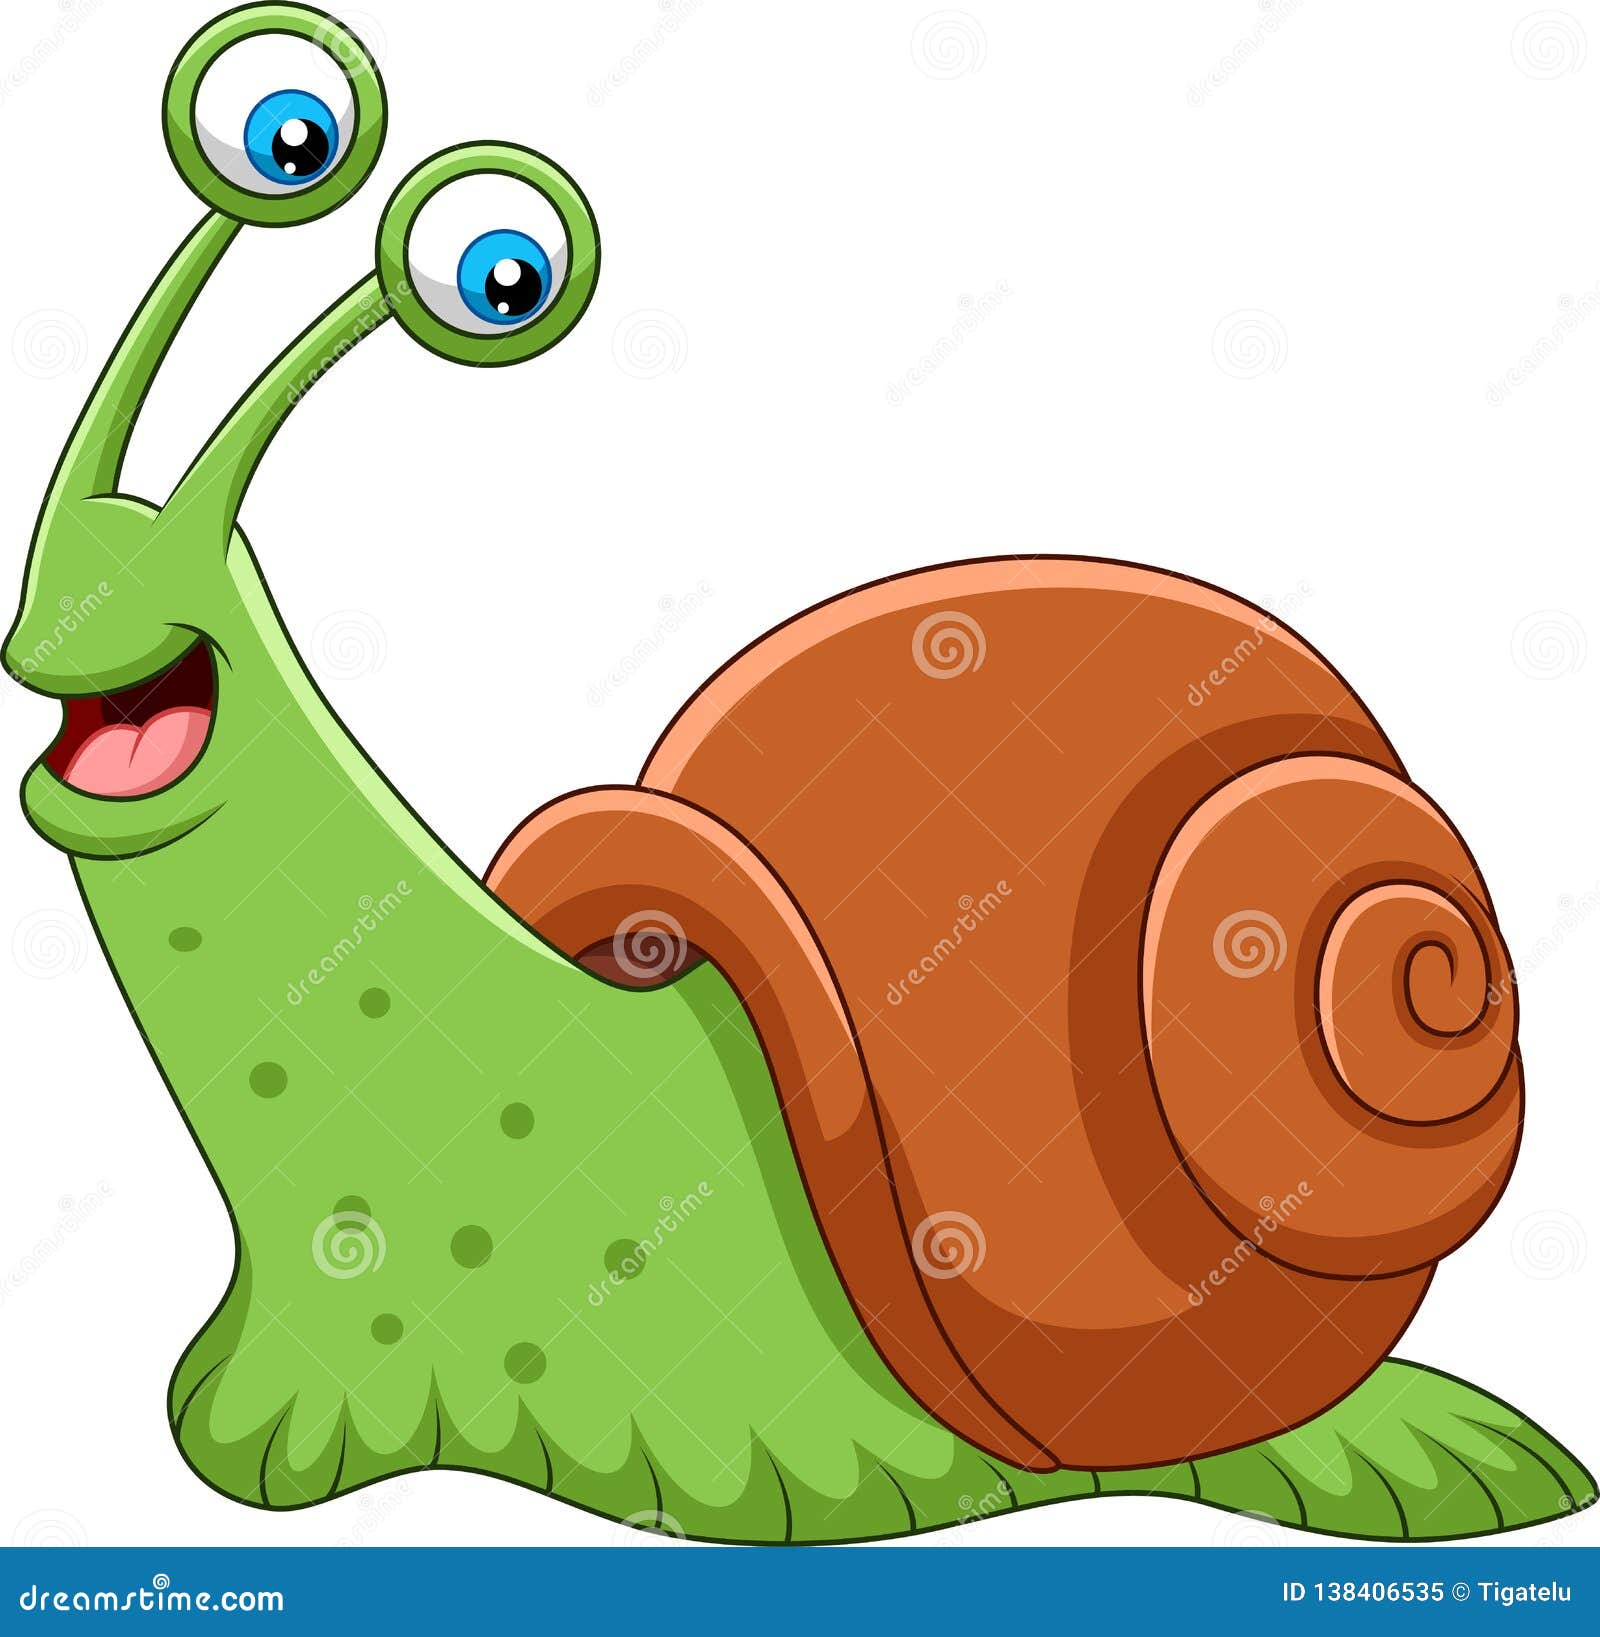 cartoon happy snail  on white background